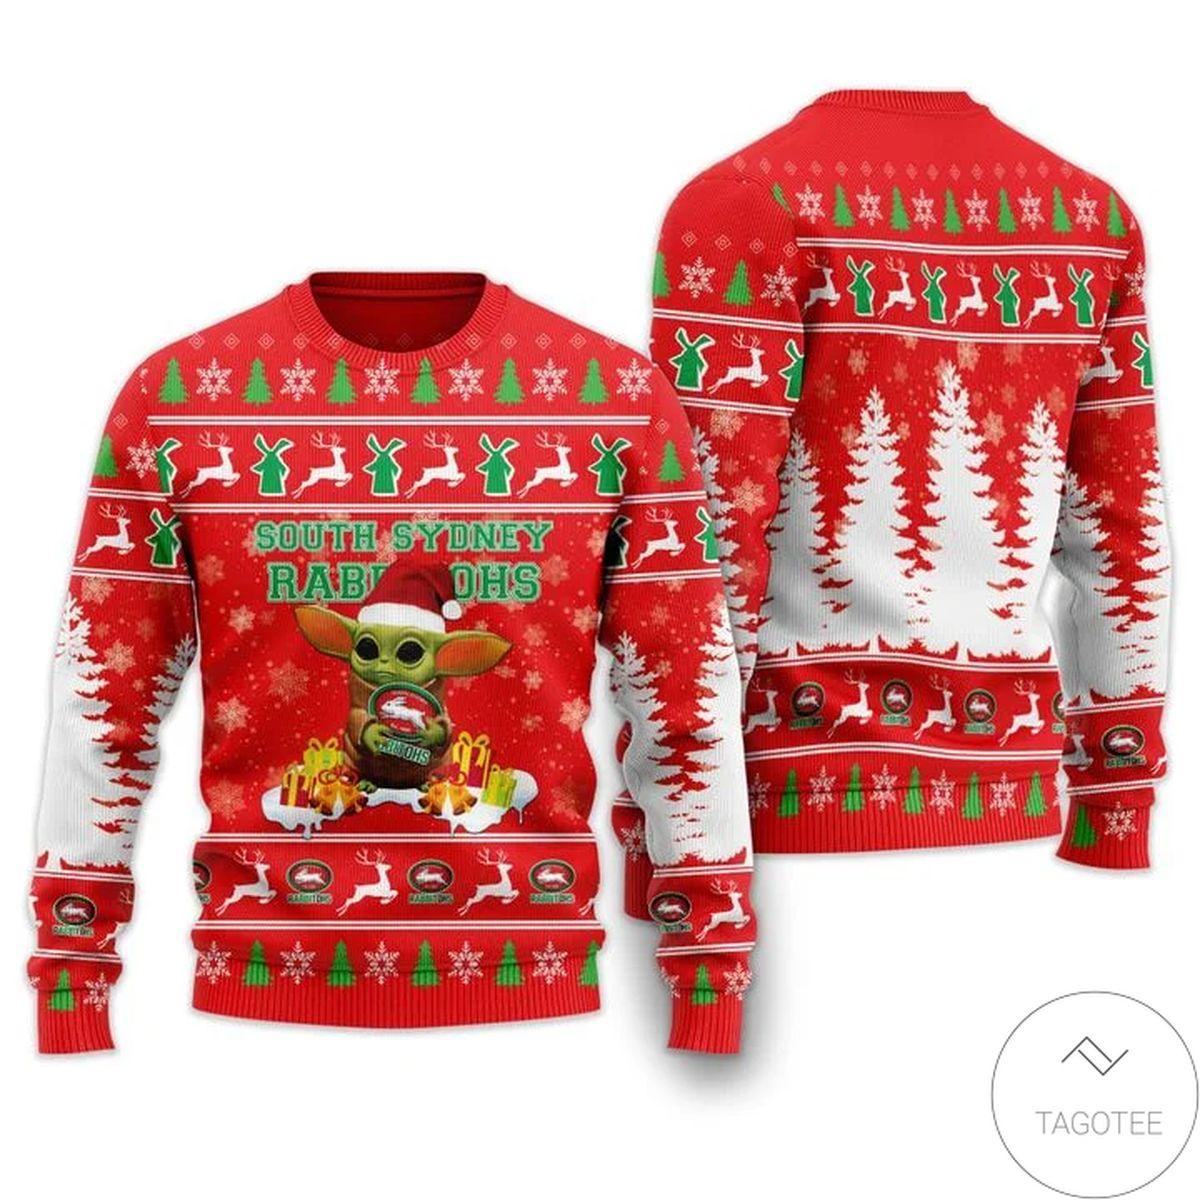 Hawthorn Hawks Sweater Best Gift For Fans